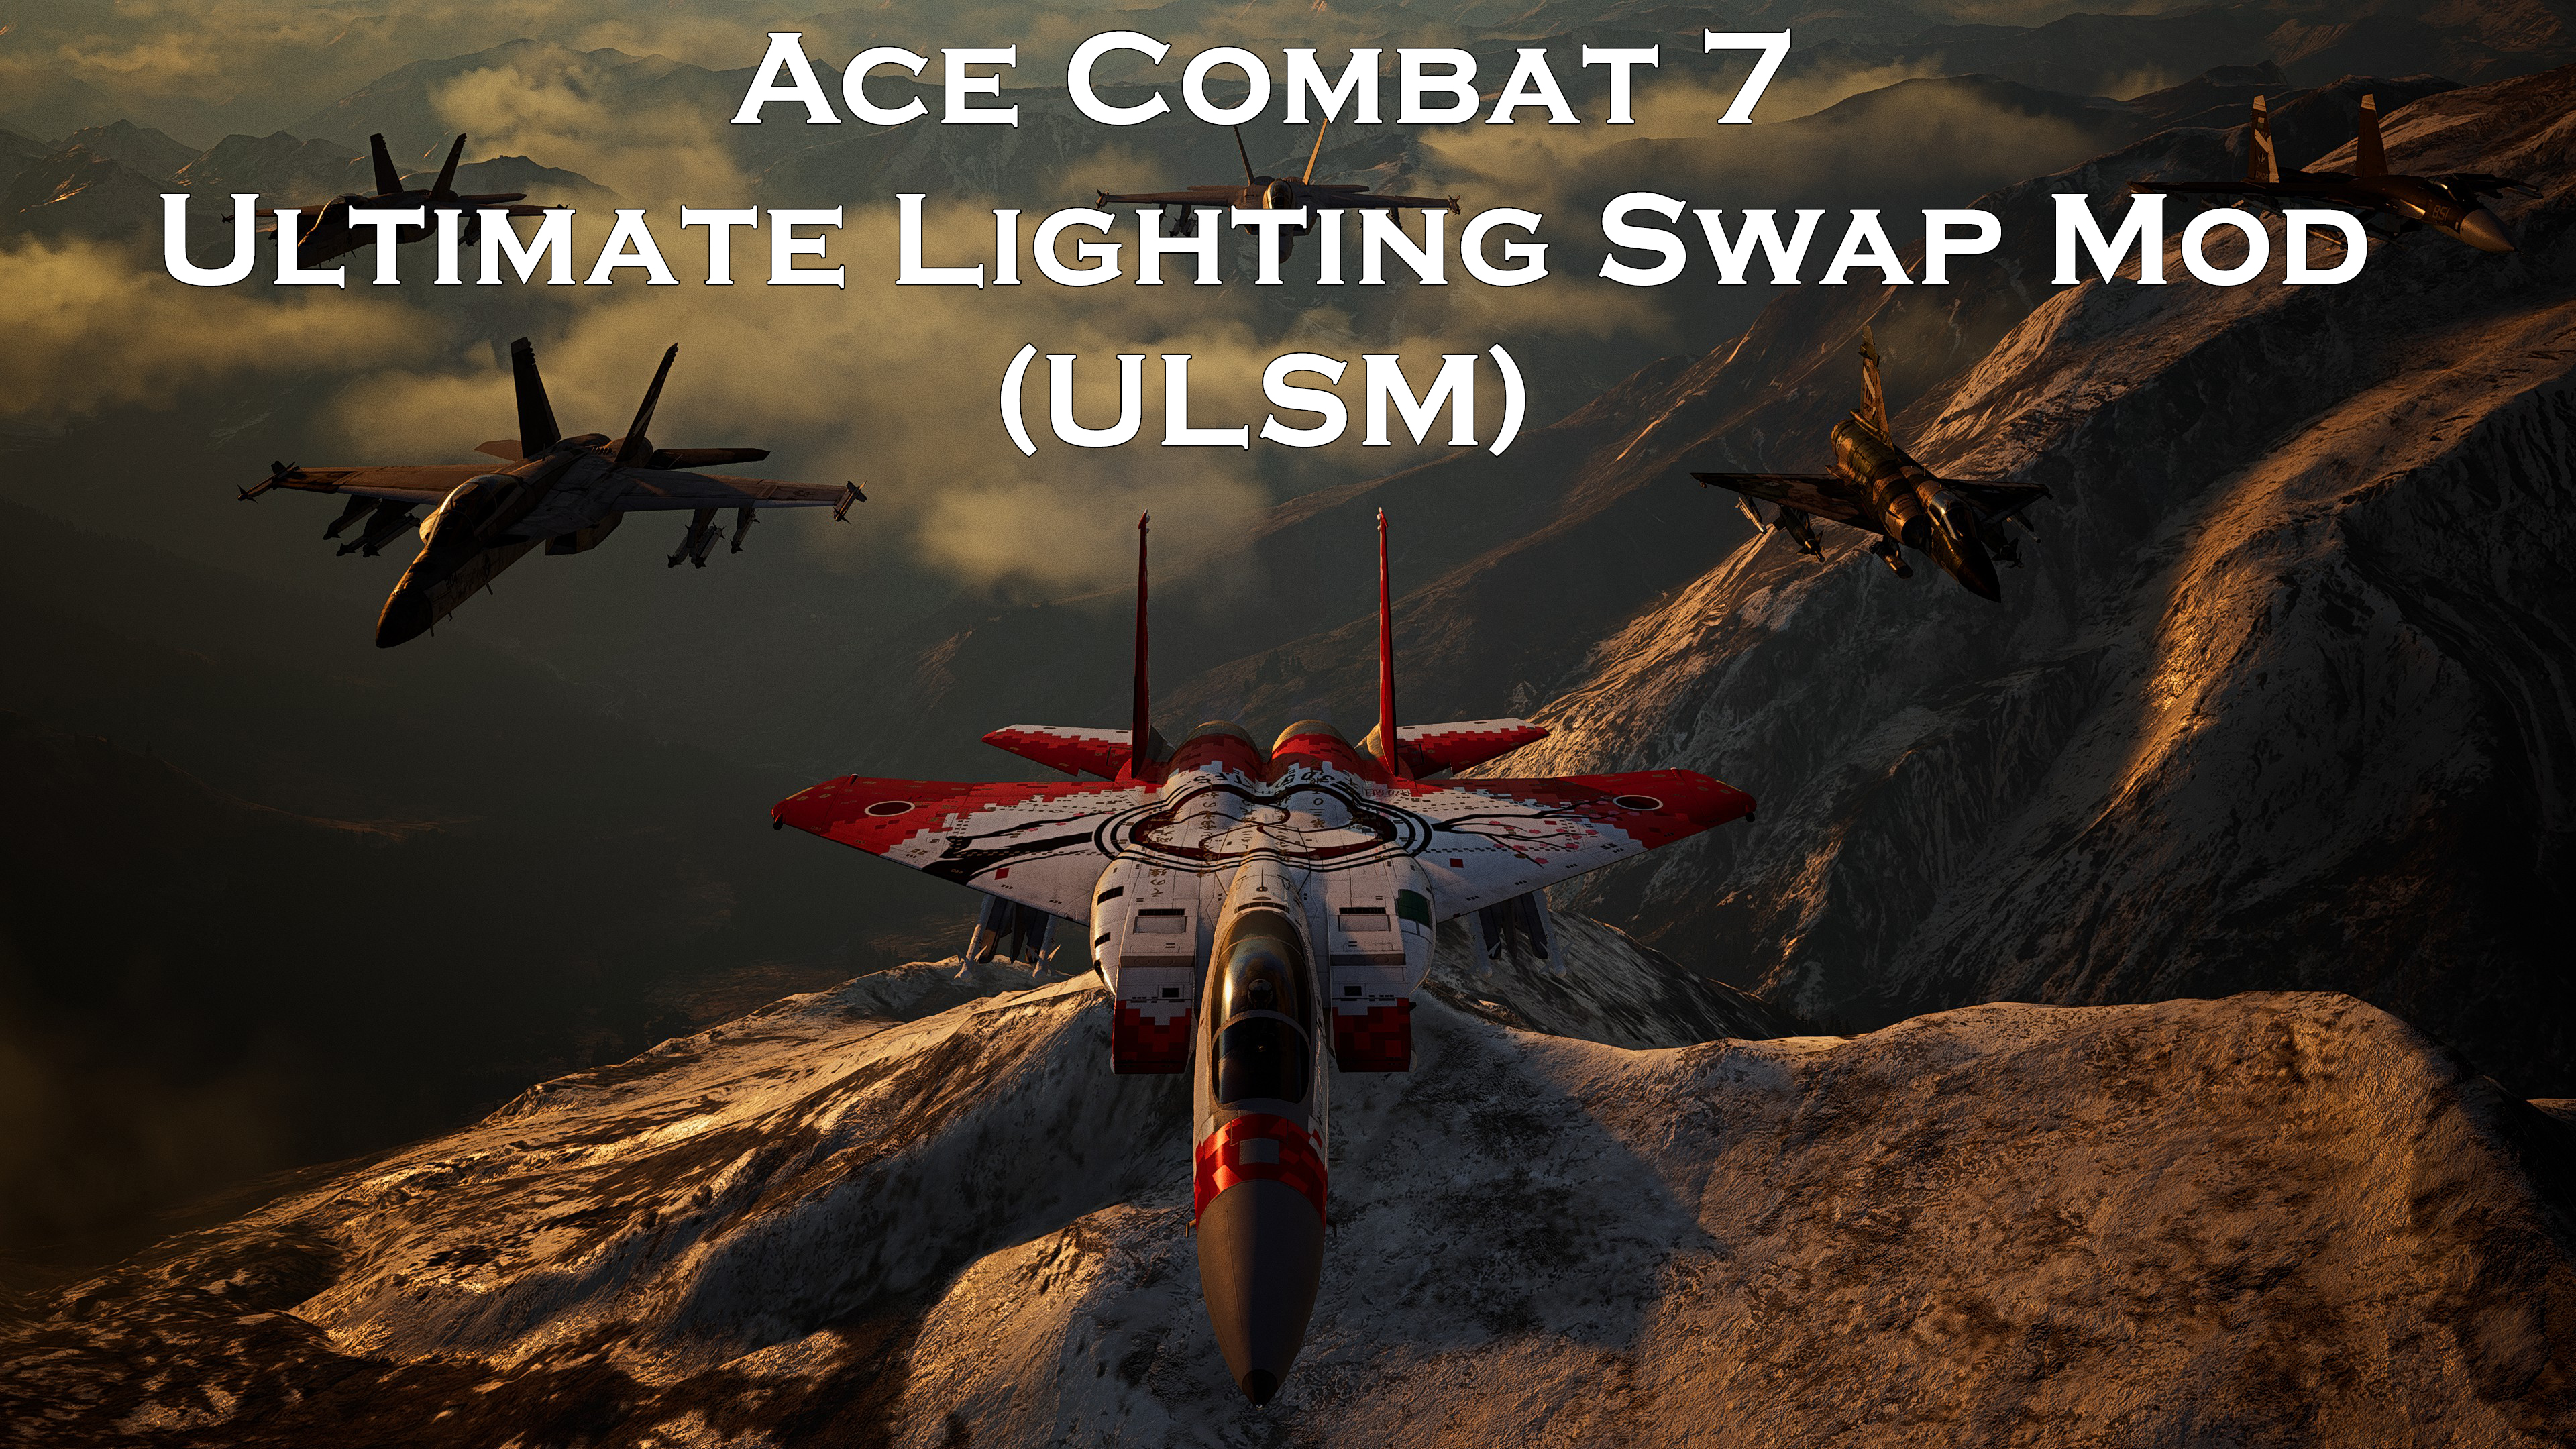 Mission 6 Long Night Lighting Mod v1.1 addon - Ace Combat 7